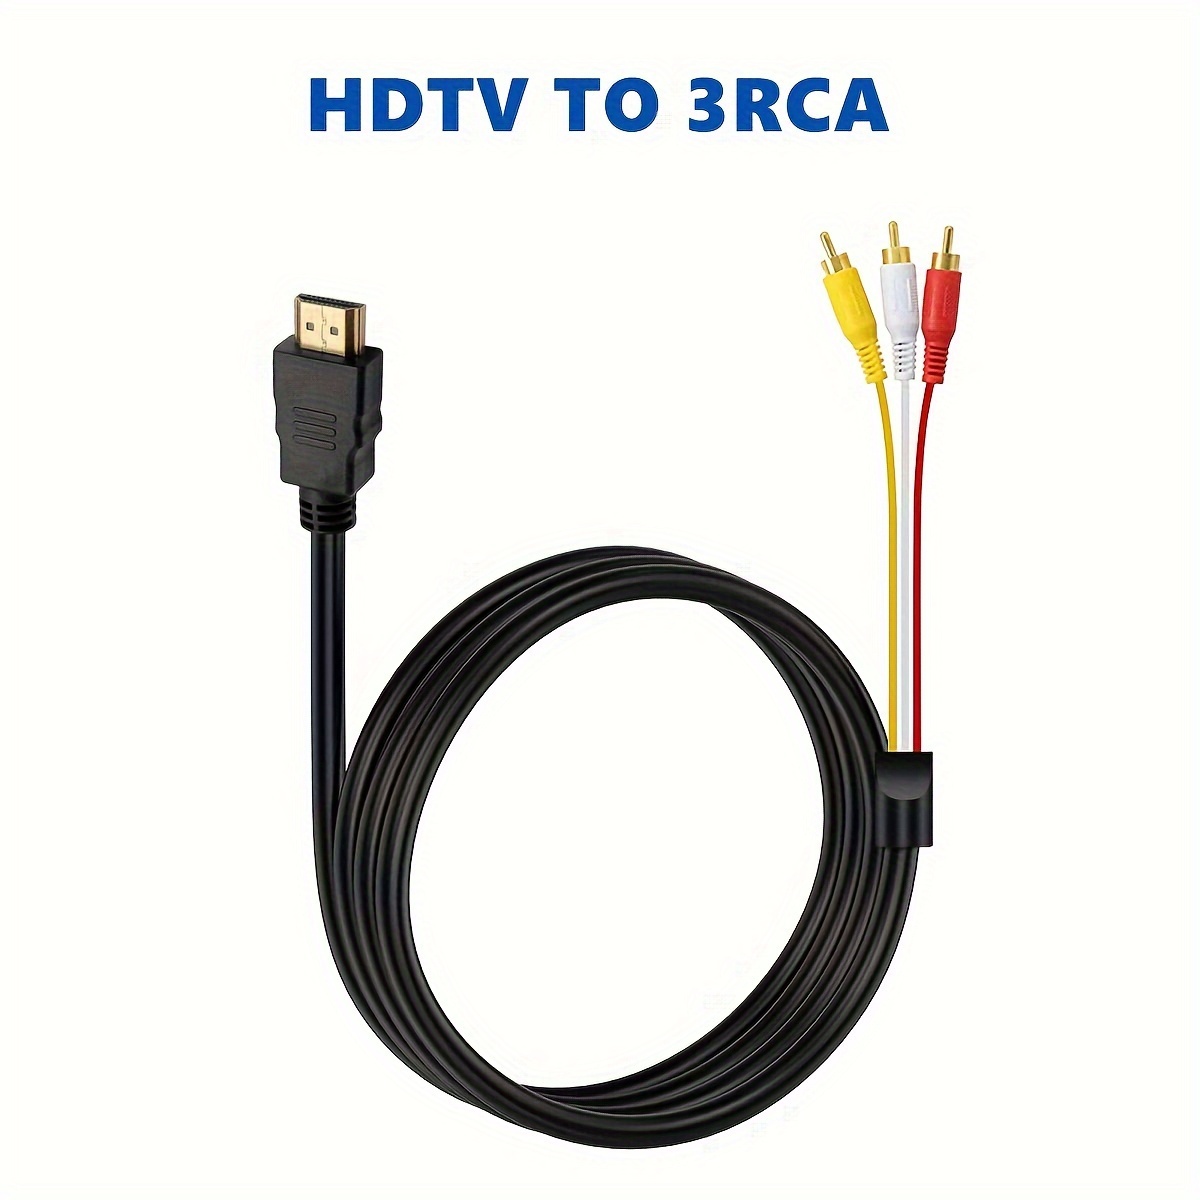 Cable HDMI a RCA, 1080p Hdmi a 3rca Set Top Box Hd Conversion